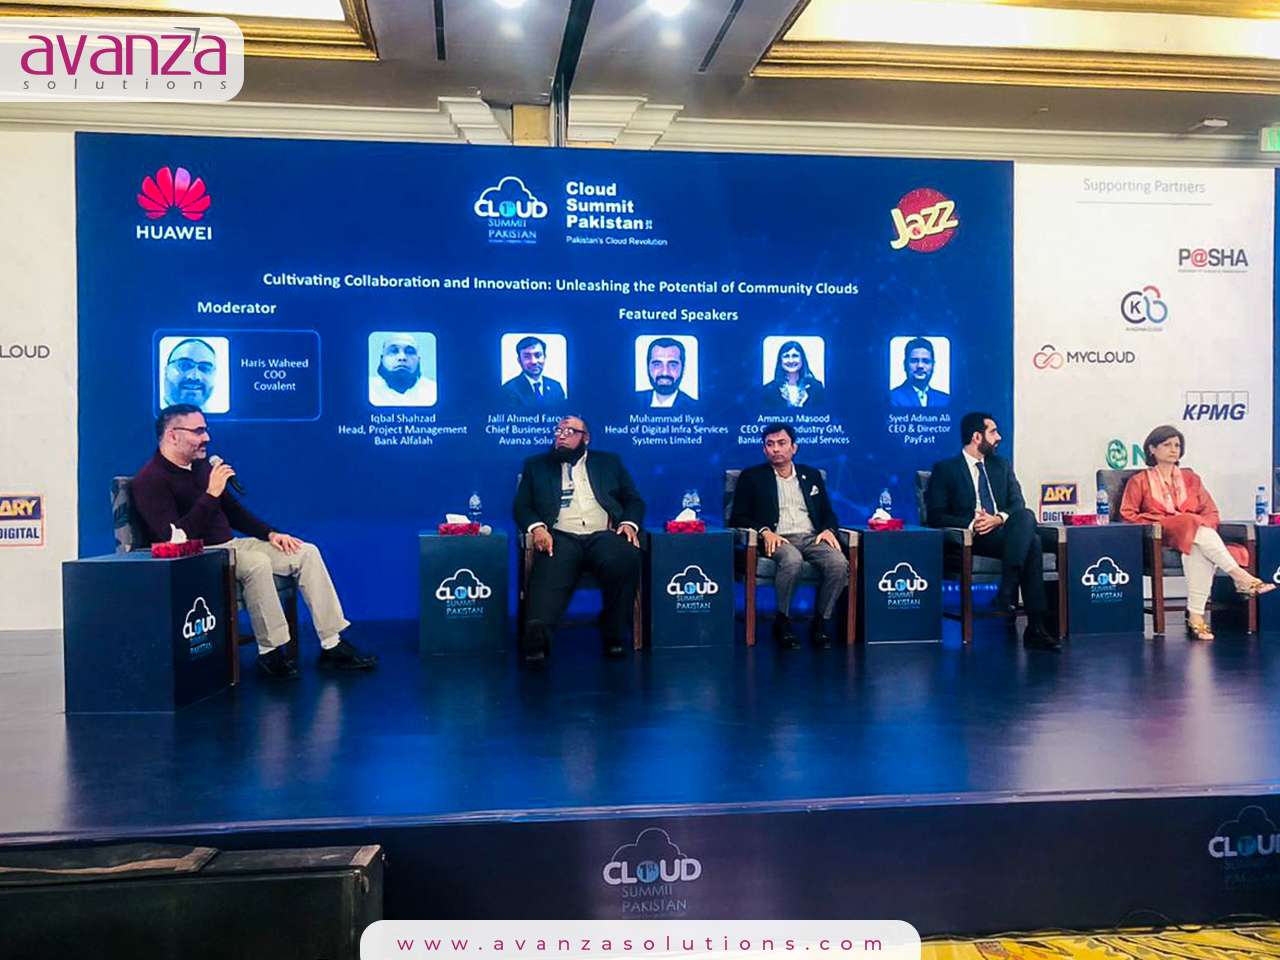 Avanza Solutions at Cloud Summit Pakistan